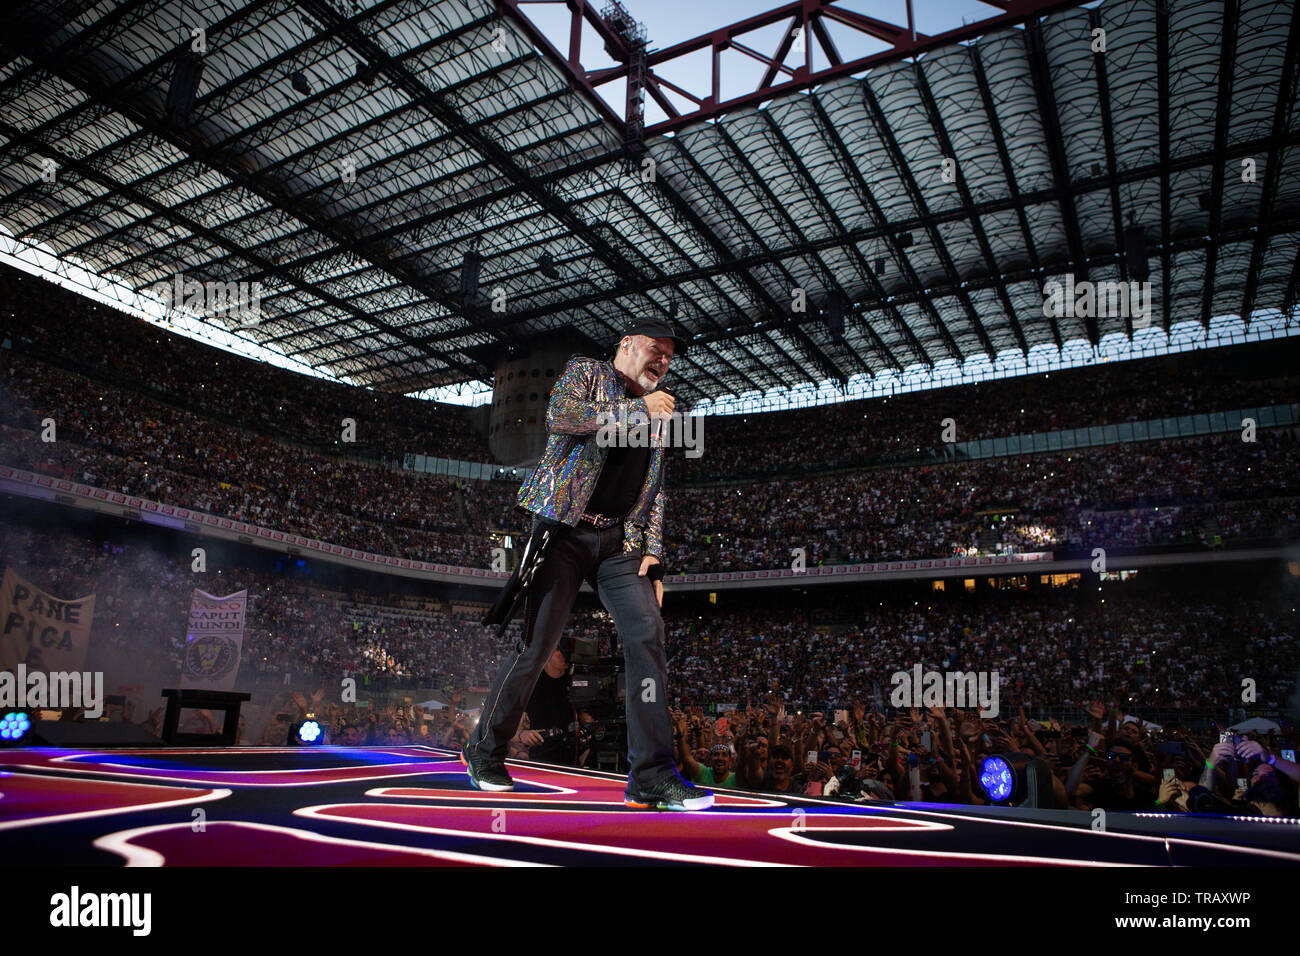 Milano, 1 giugno 2019. Vasco Rossi dans le concerto allo Stadio San Siro de Milan. Copyright Davide Merli / Alamy Banque D'Images